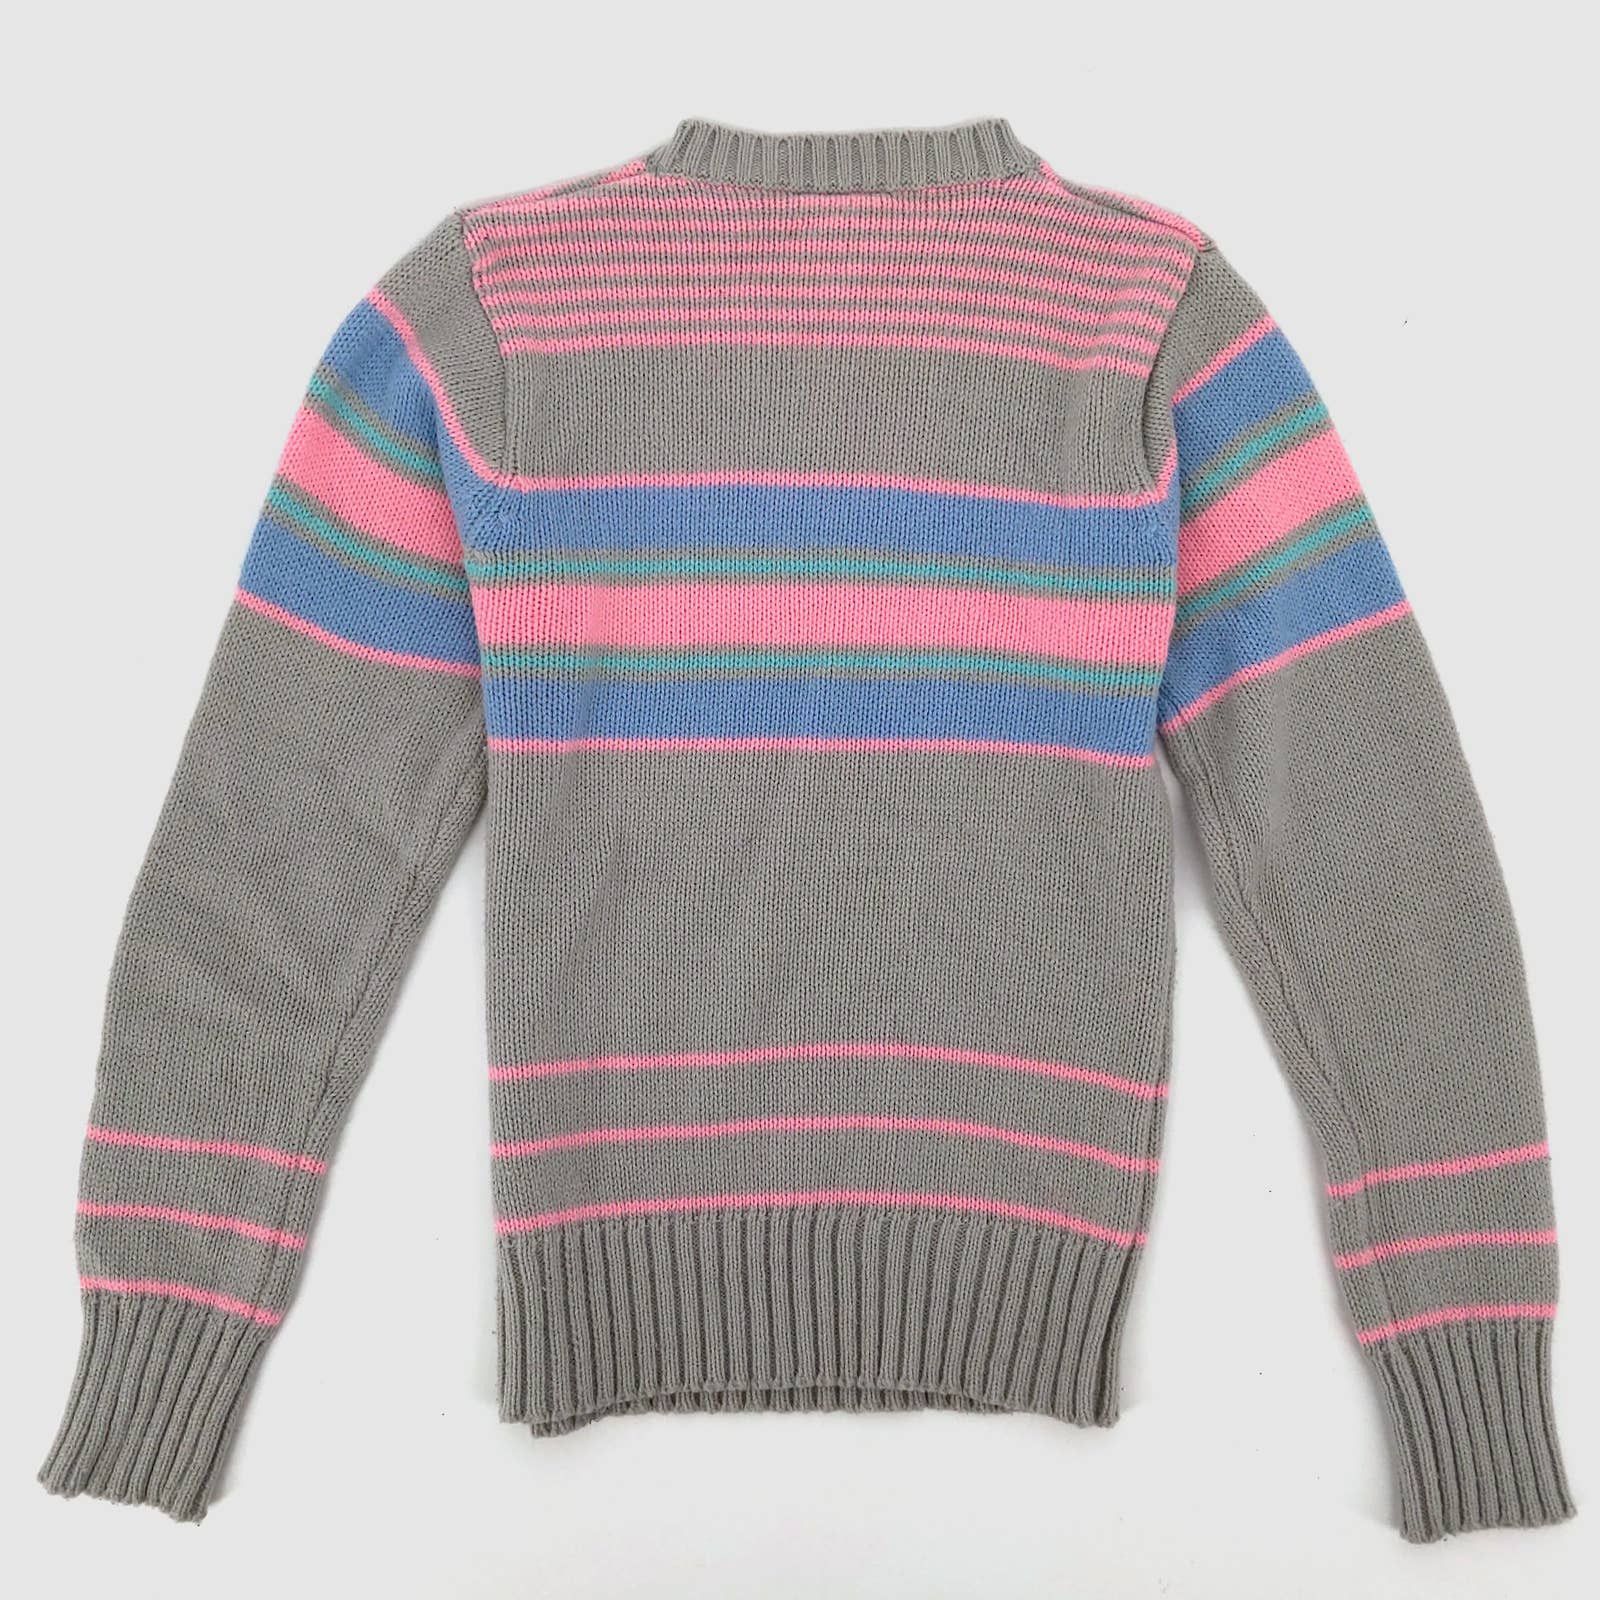 Vintage Vintage Pastel Colorblock Stripes Knit Sweater Unicorn Candy Size XS / US 0-2 / IT 36-38 - 2 Preview